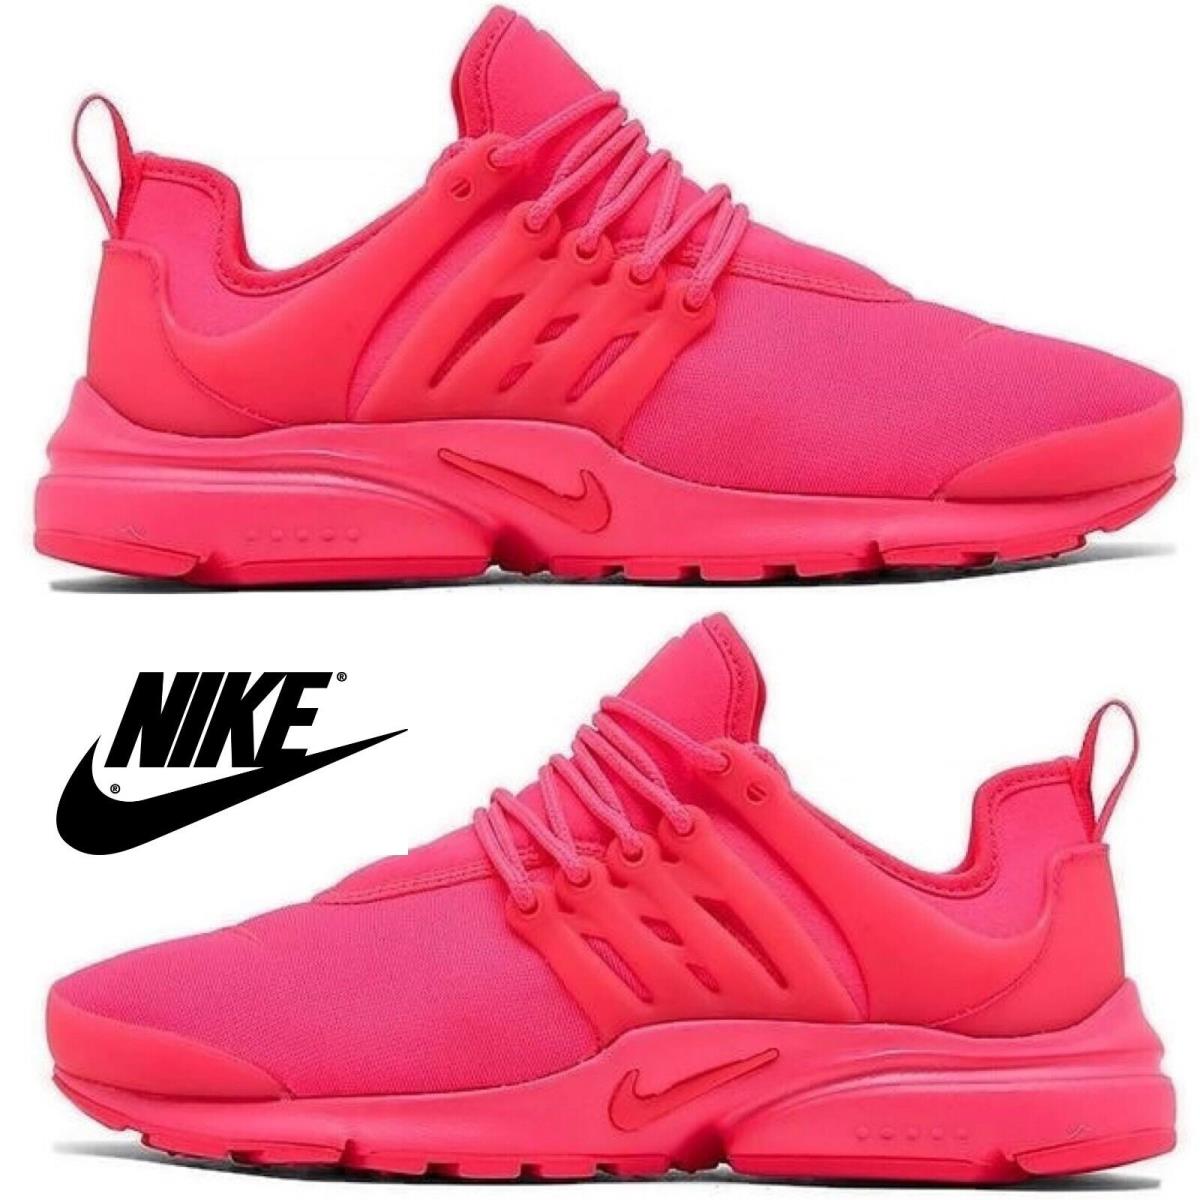 Nike Air Presto Women s Sneakers Casual Shoes Premium Running Sport Pink - Pink , Pink/Pink Manufacturer